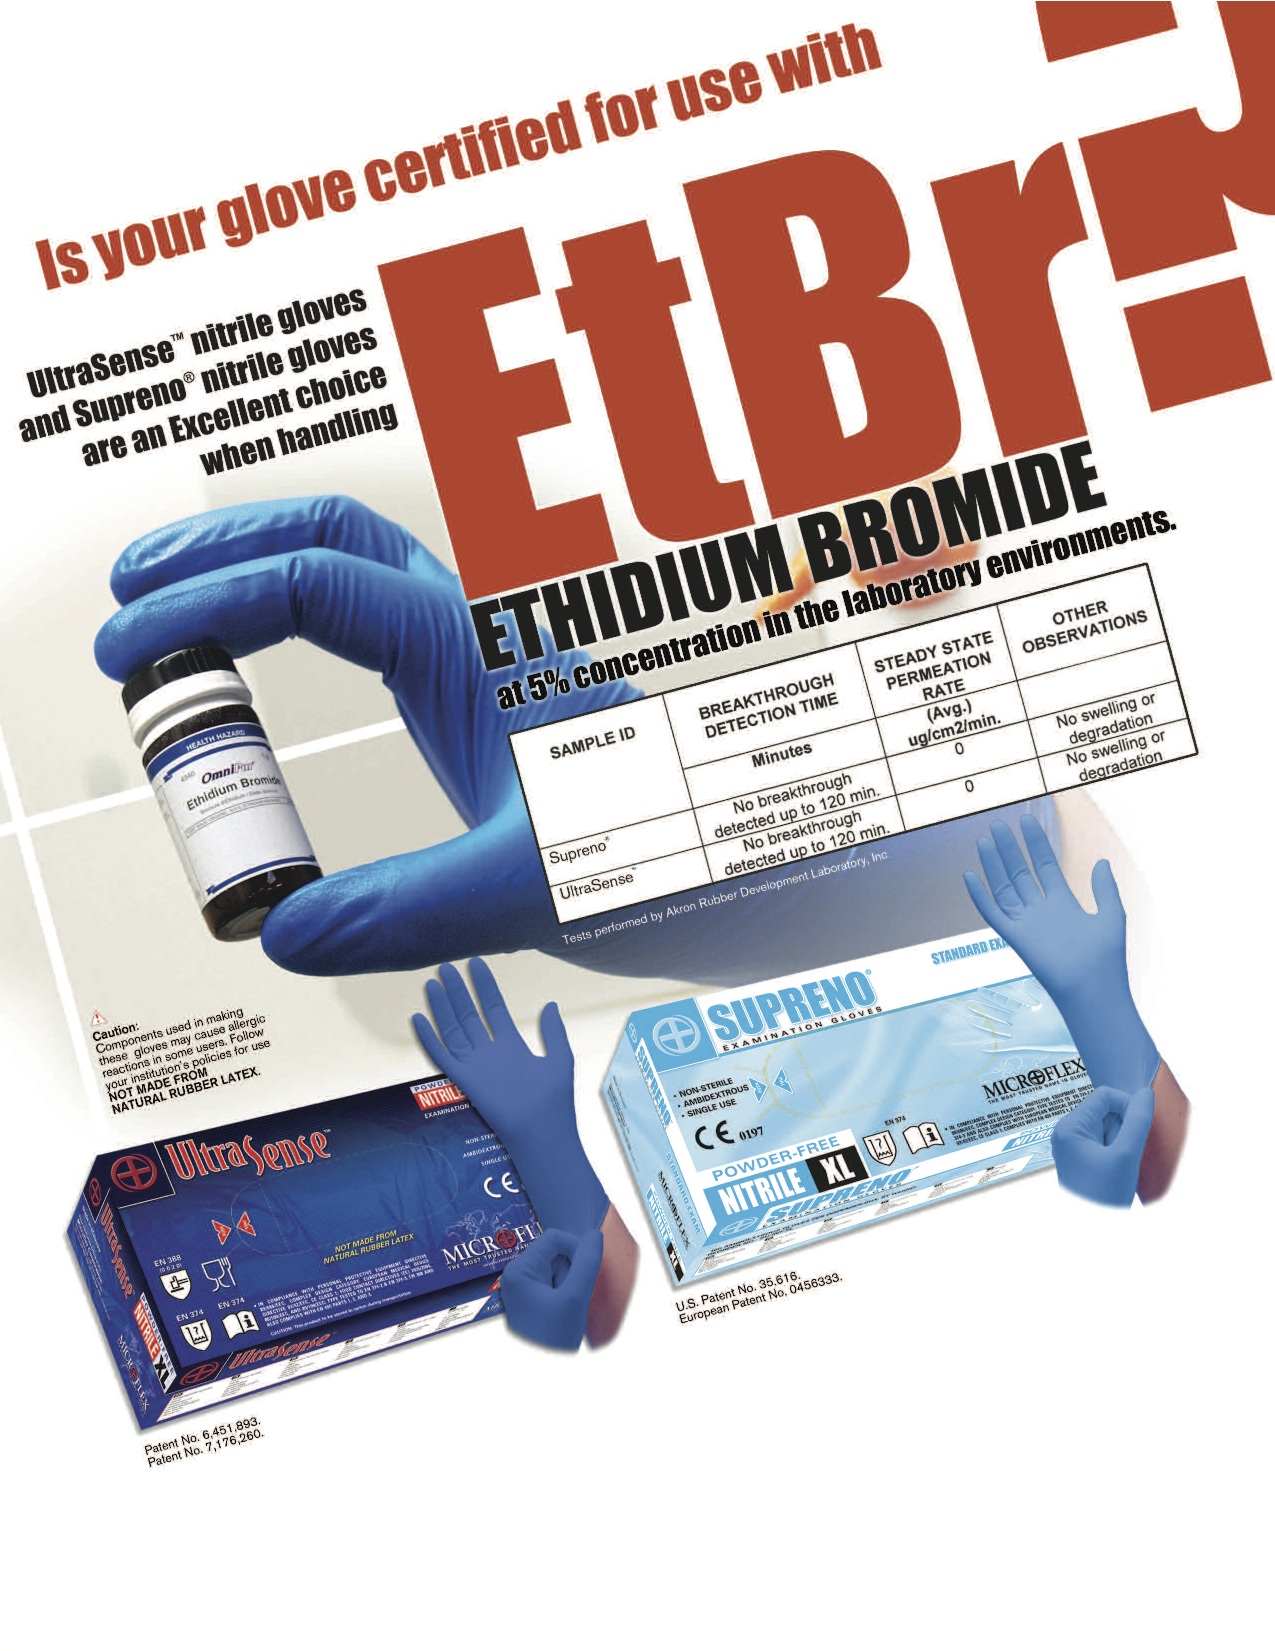 Ethidium-Bromide-Protection-Glove